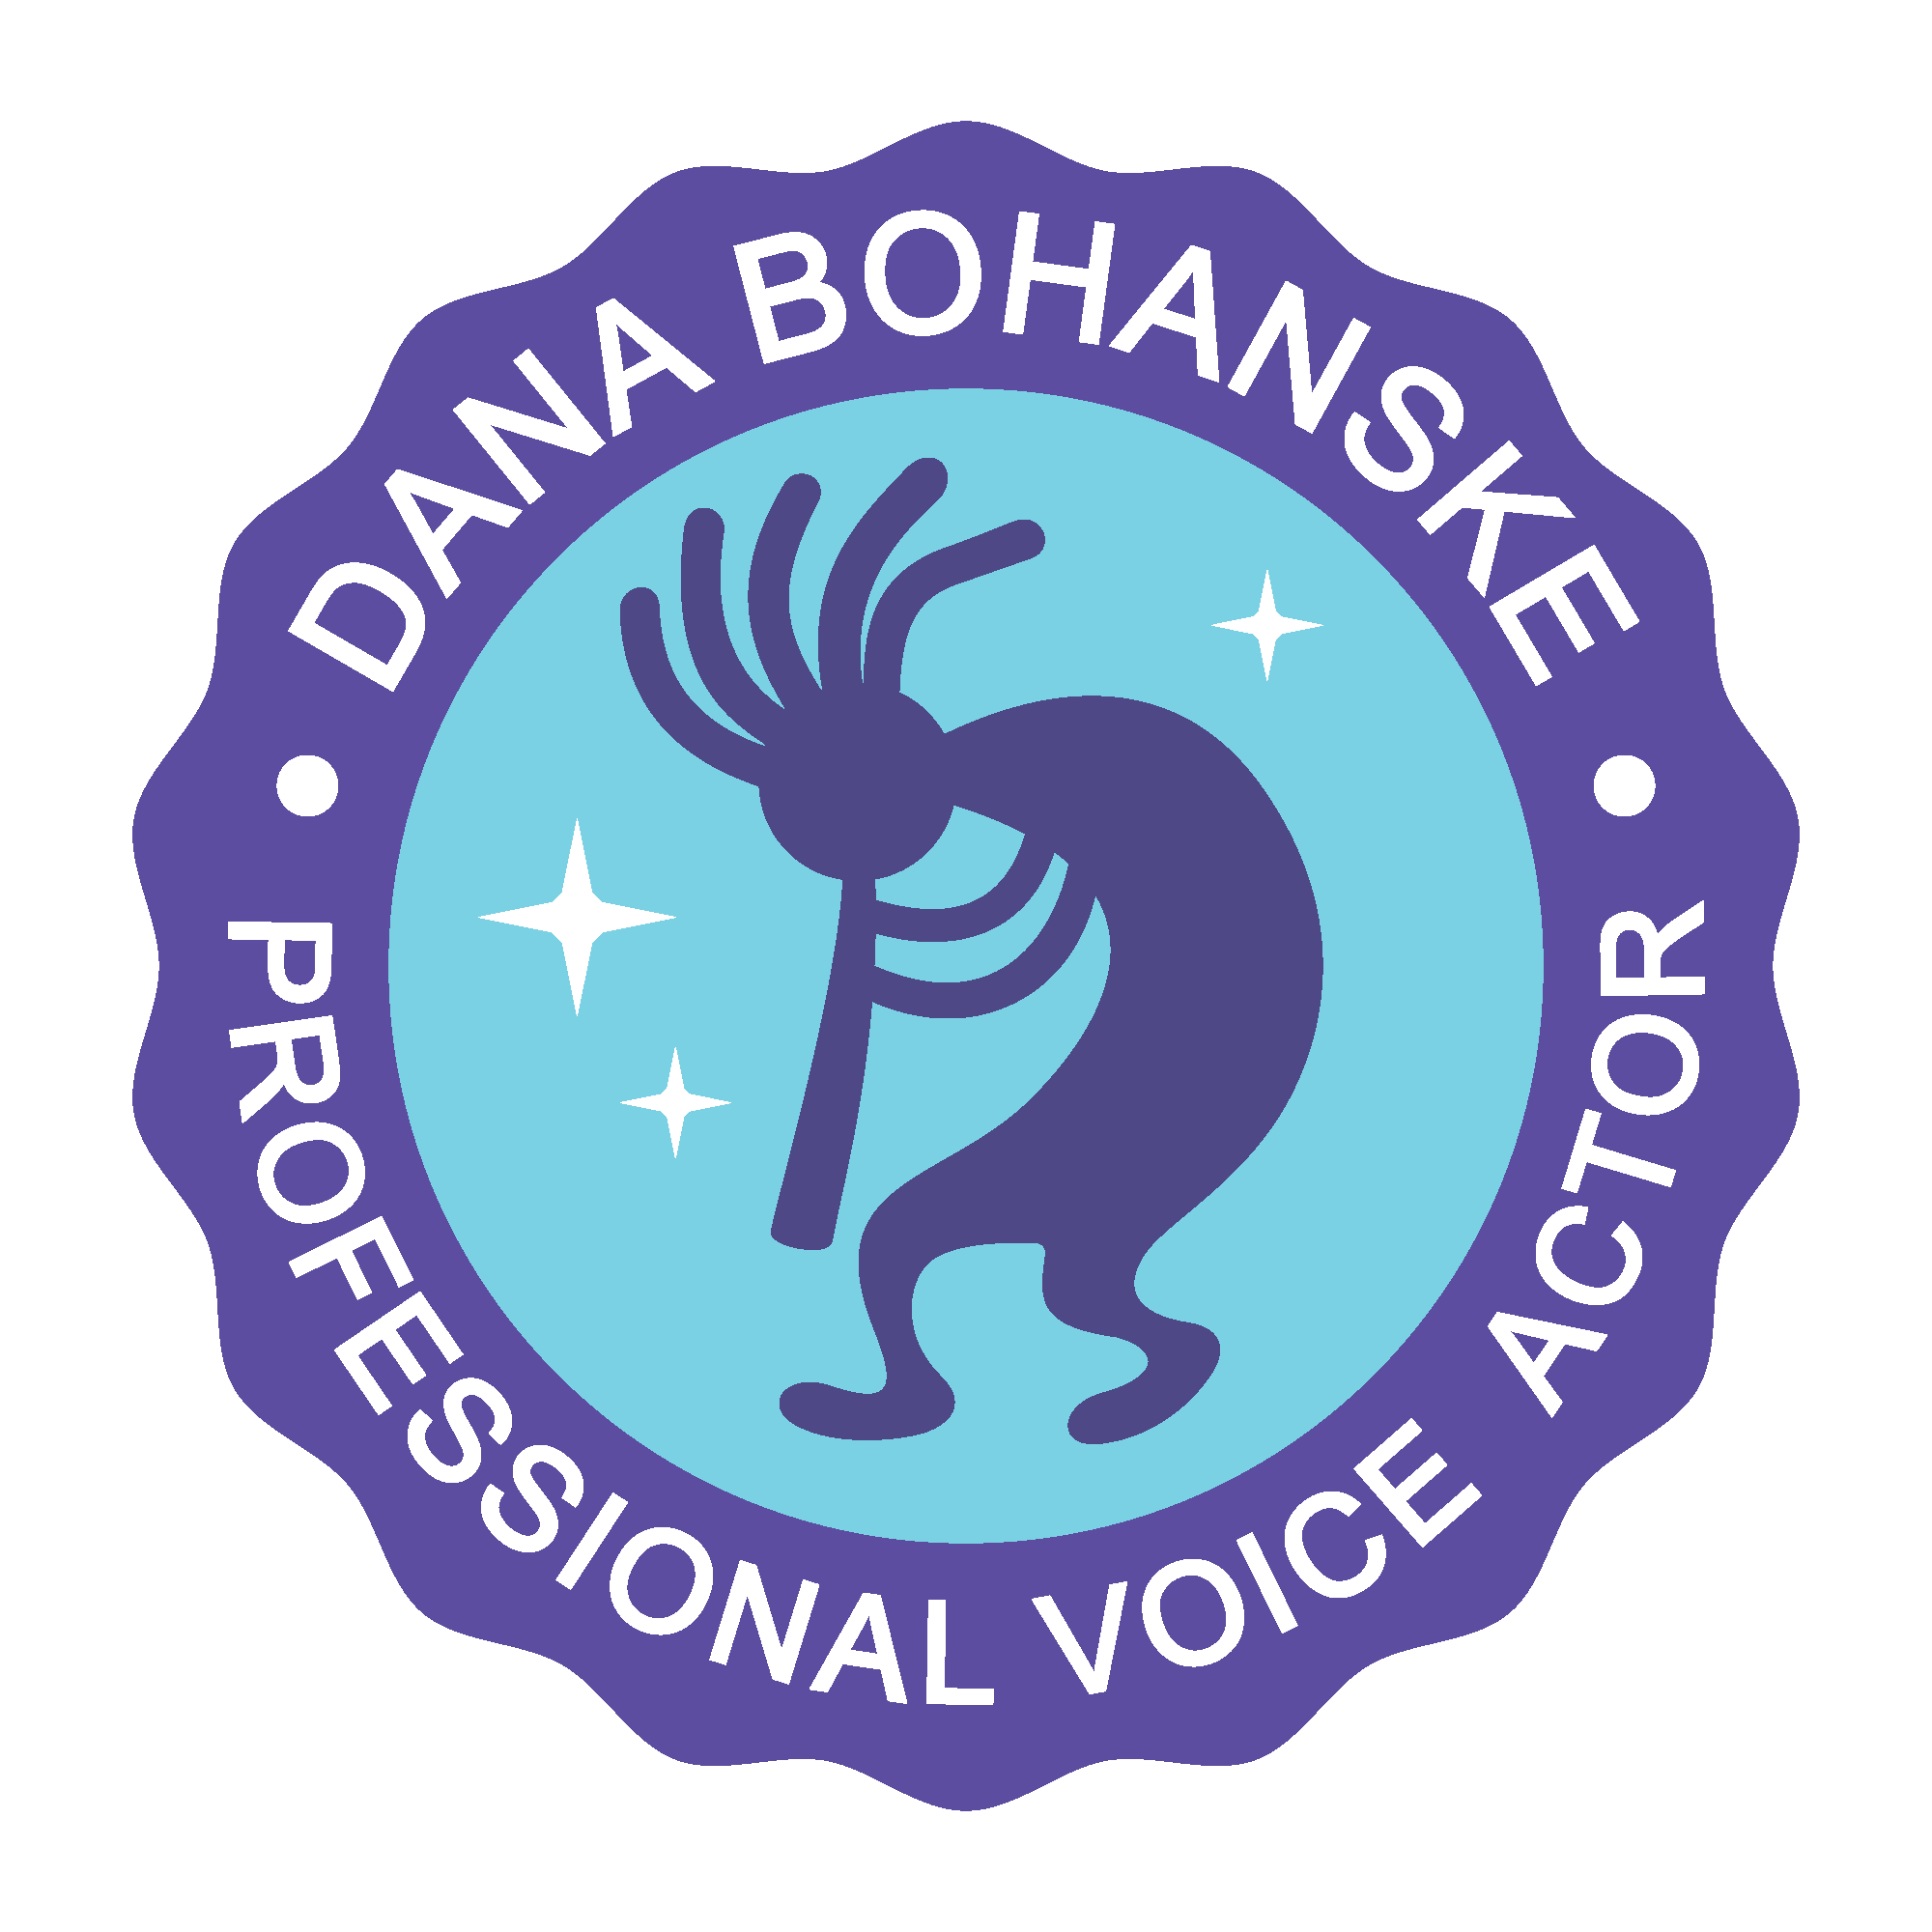 DANA BOHANSKE PROFESSIONAL VOICE ACTOR